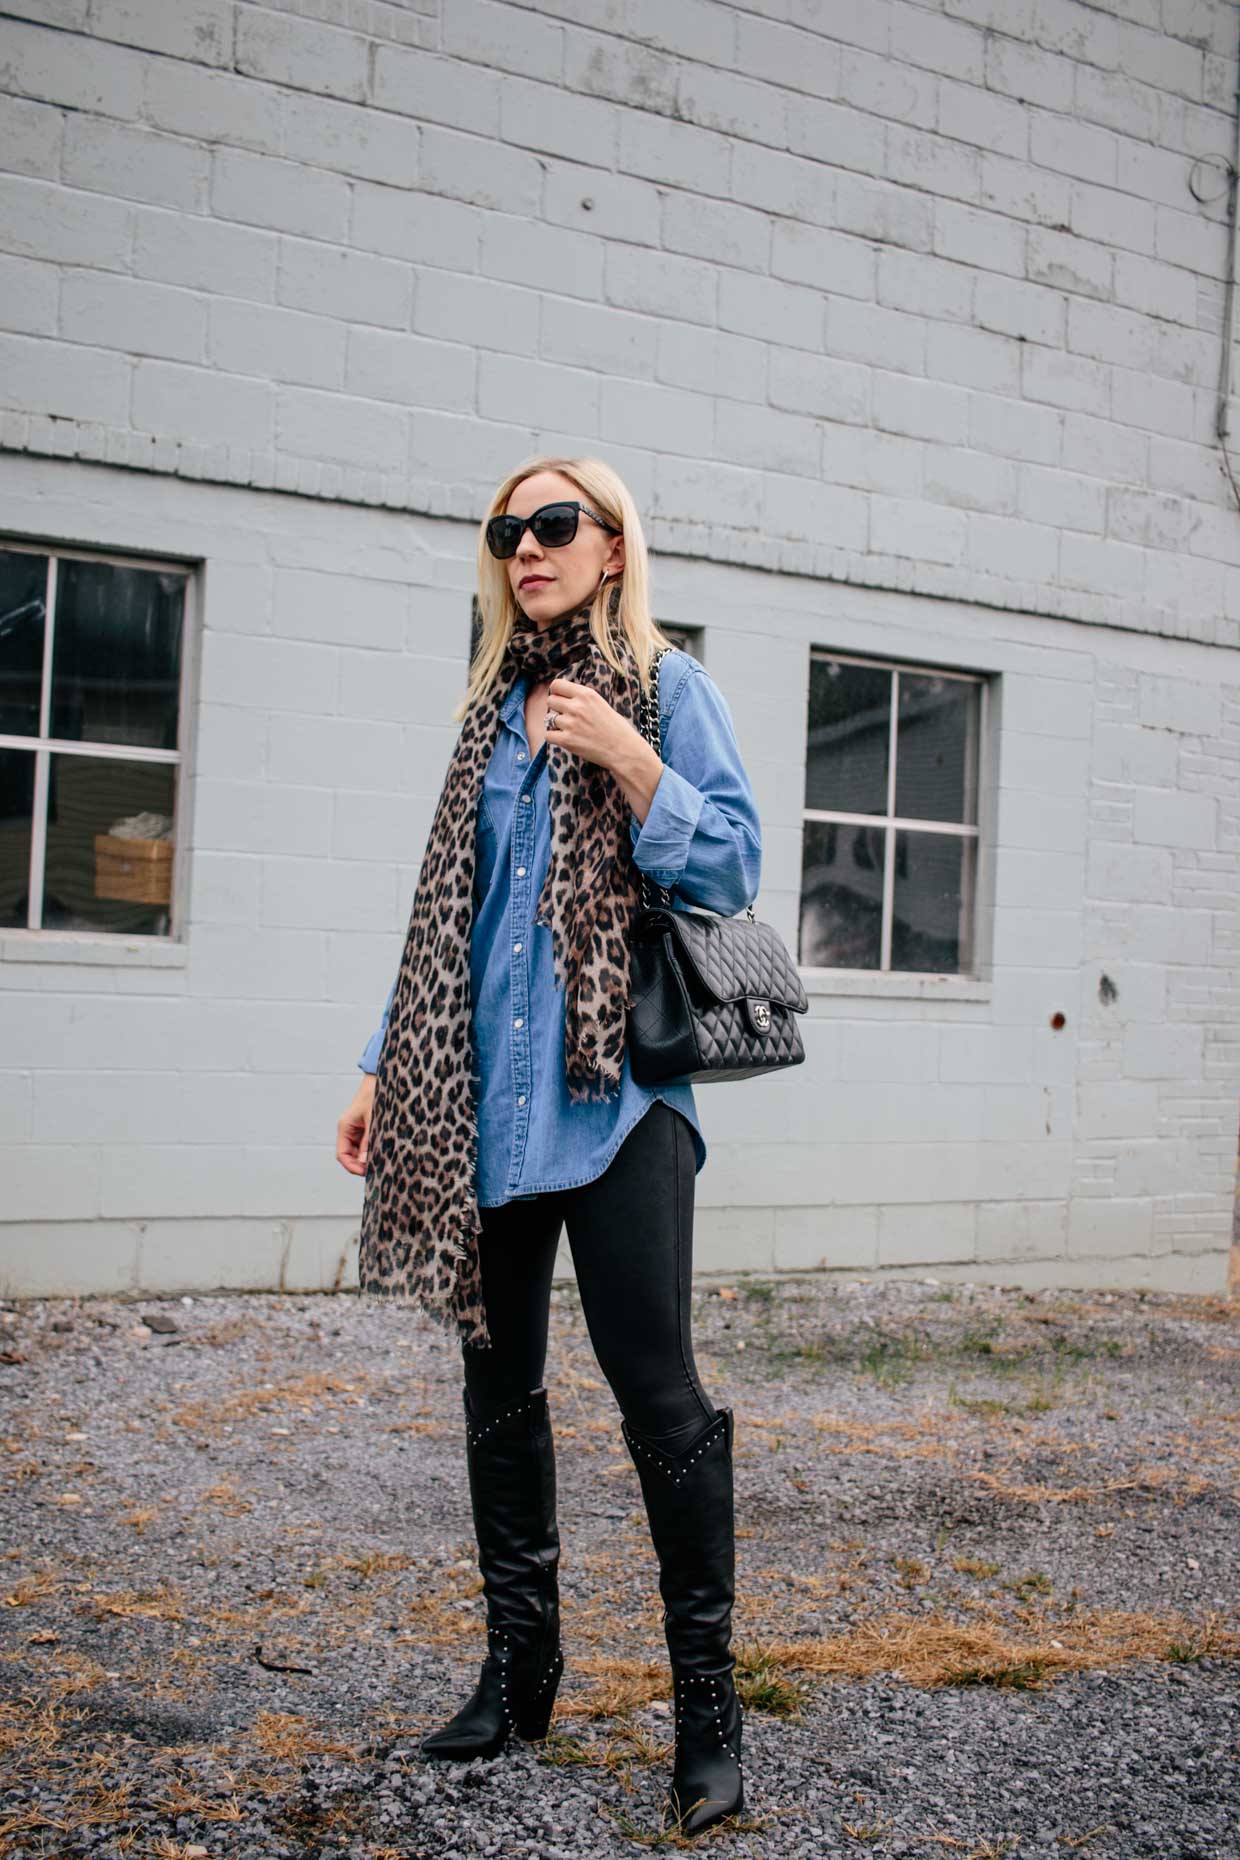 Meagan Brandon fashion blogger of Meagan's Moda shows how to style